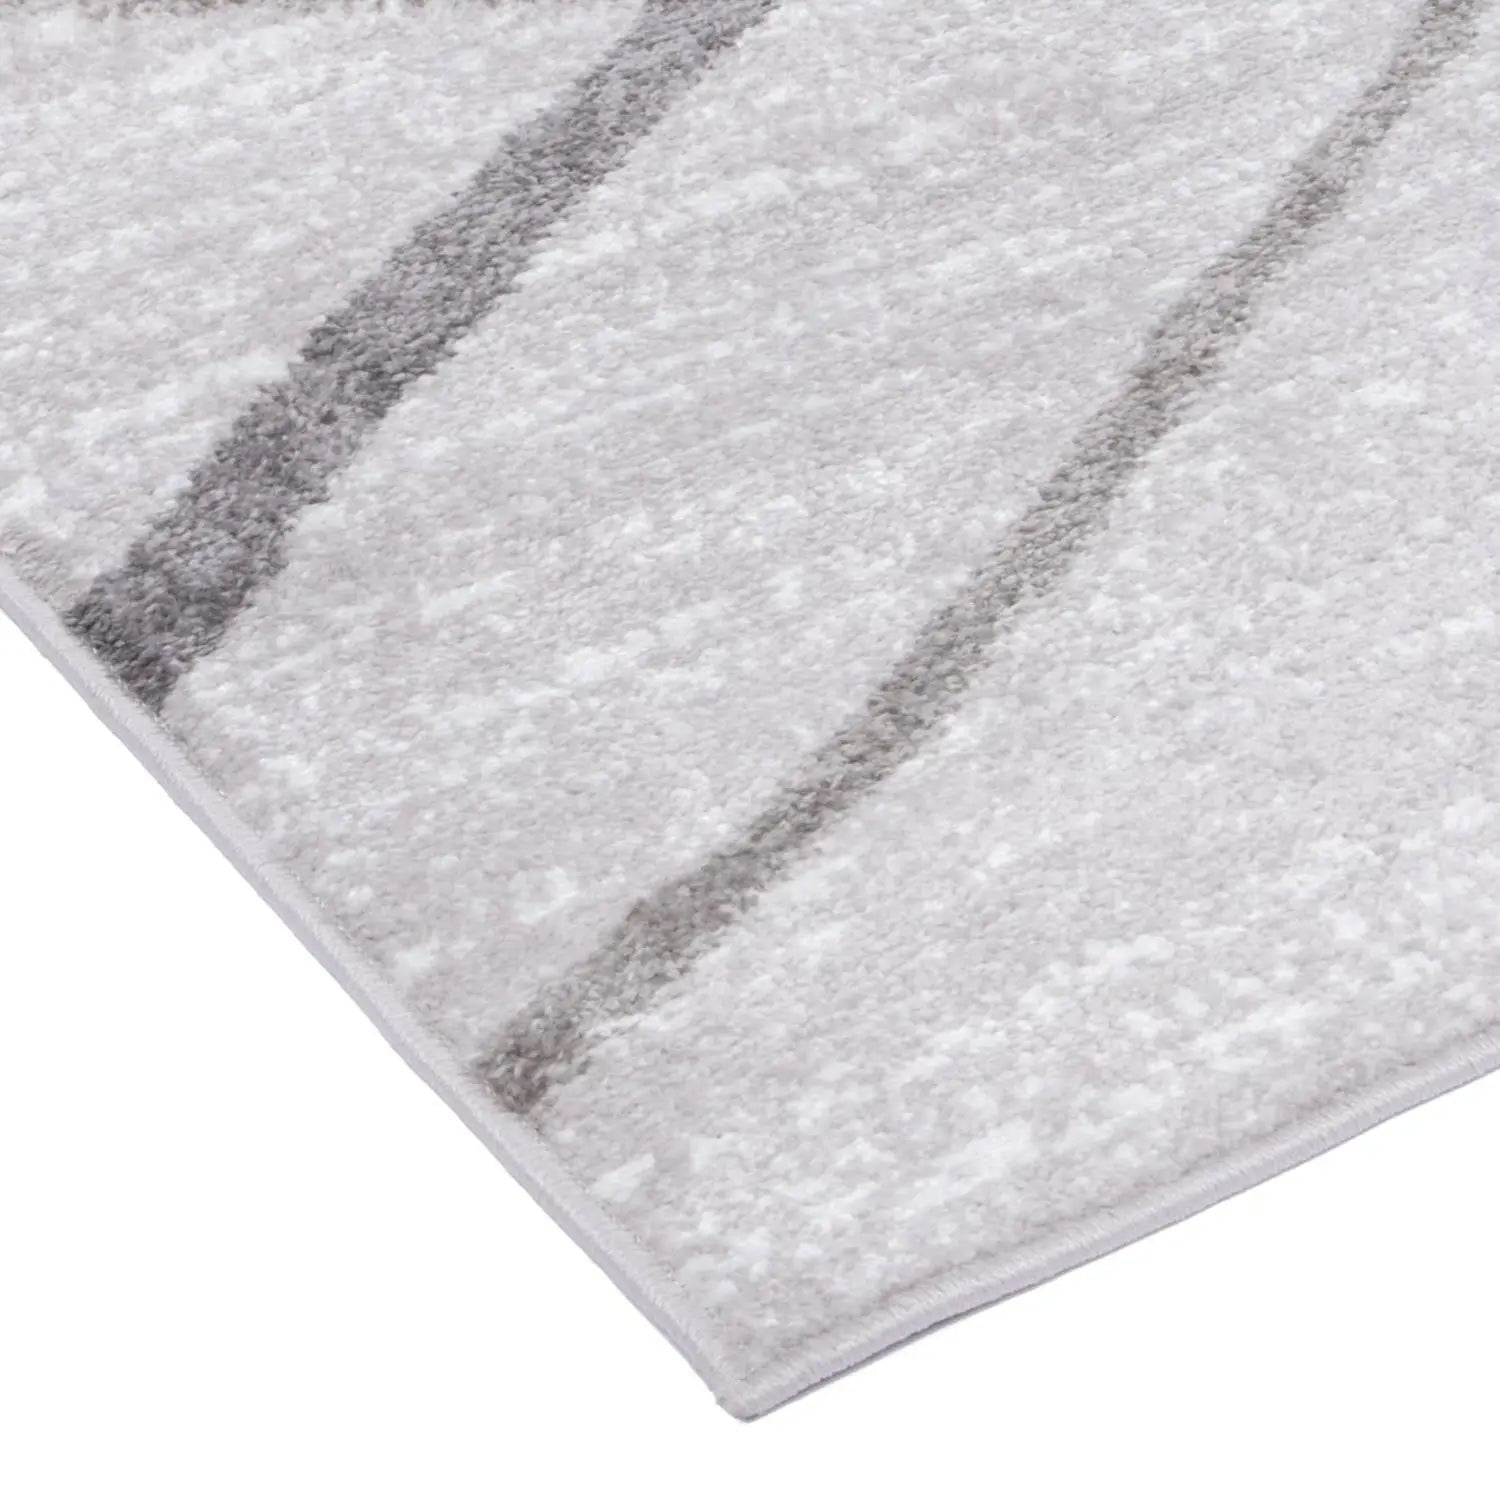 Windjana Abstract Stripe White Rug - Rugs - Rugs a Million